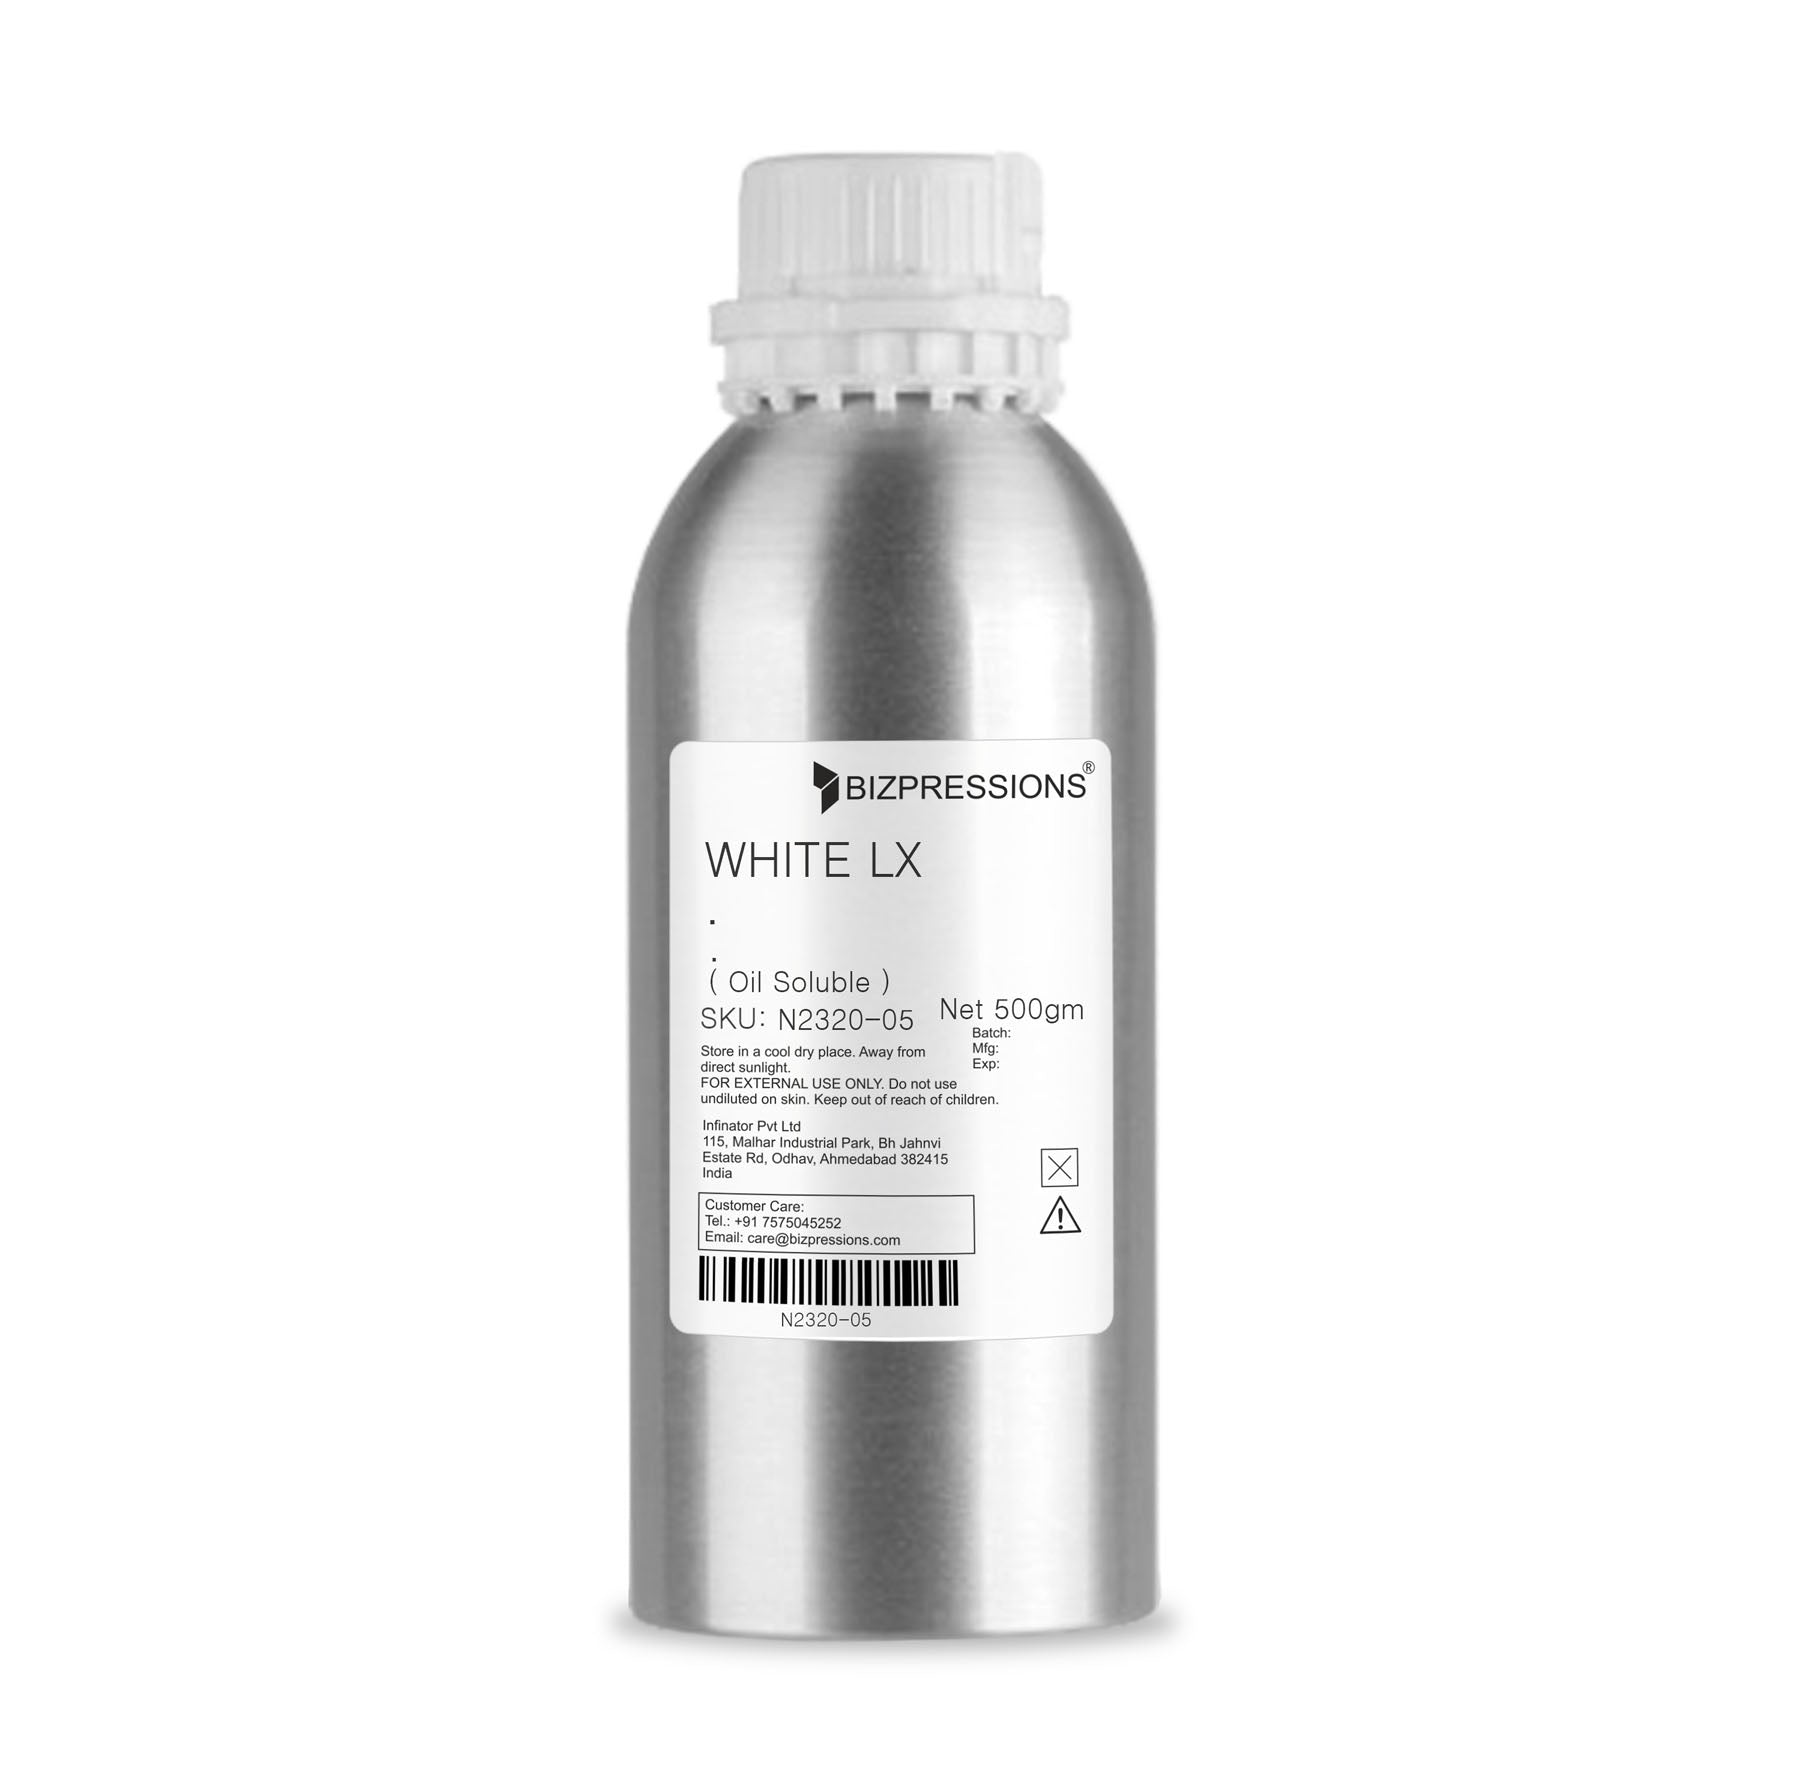 WHITE LX - Fragrance ( Oil Soluble ) - 500 gm